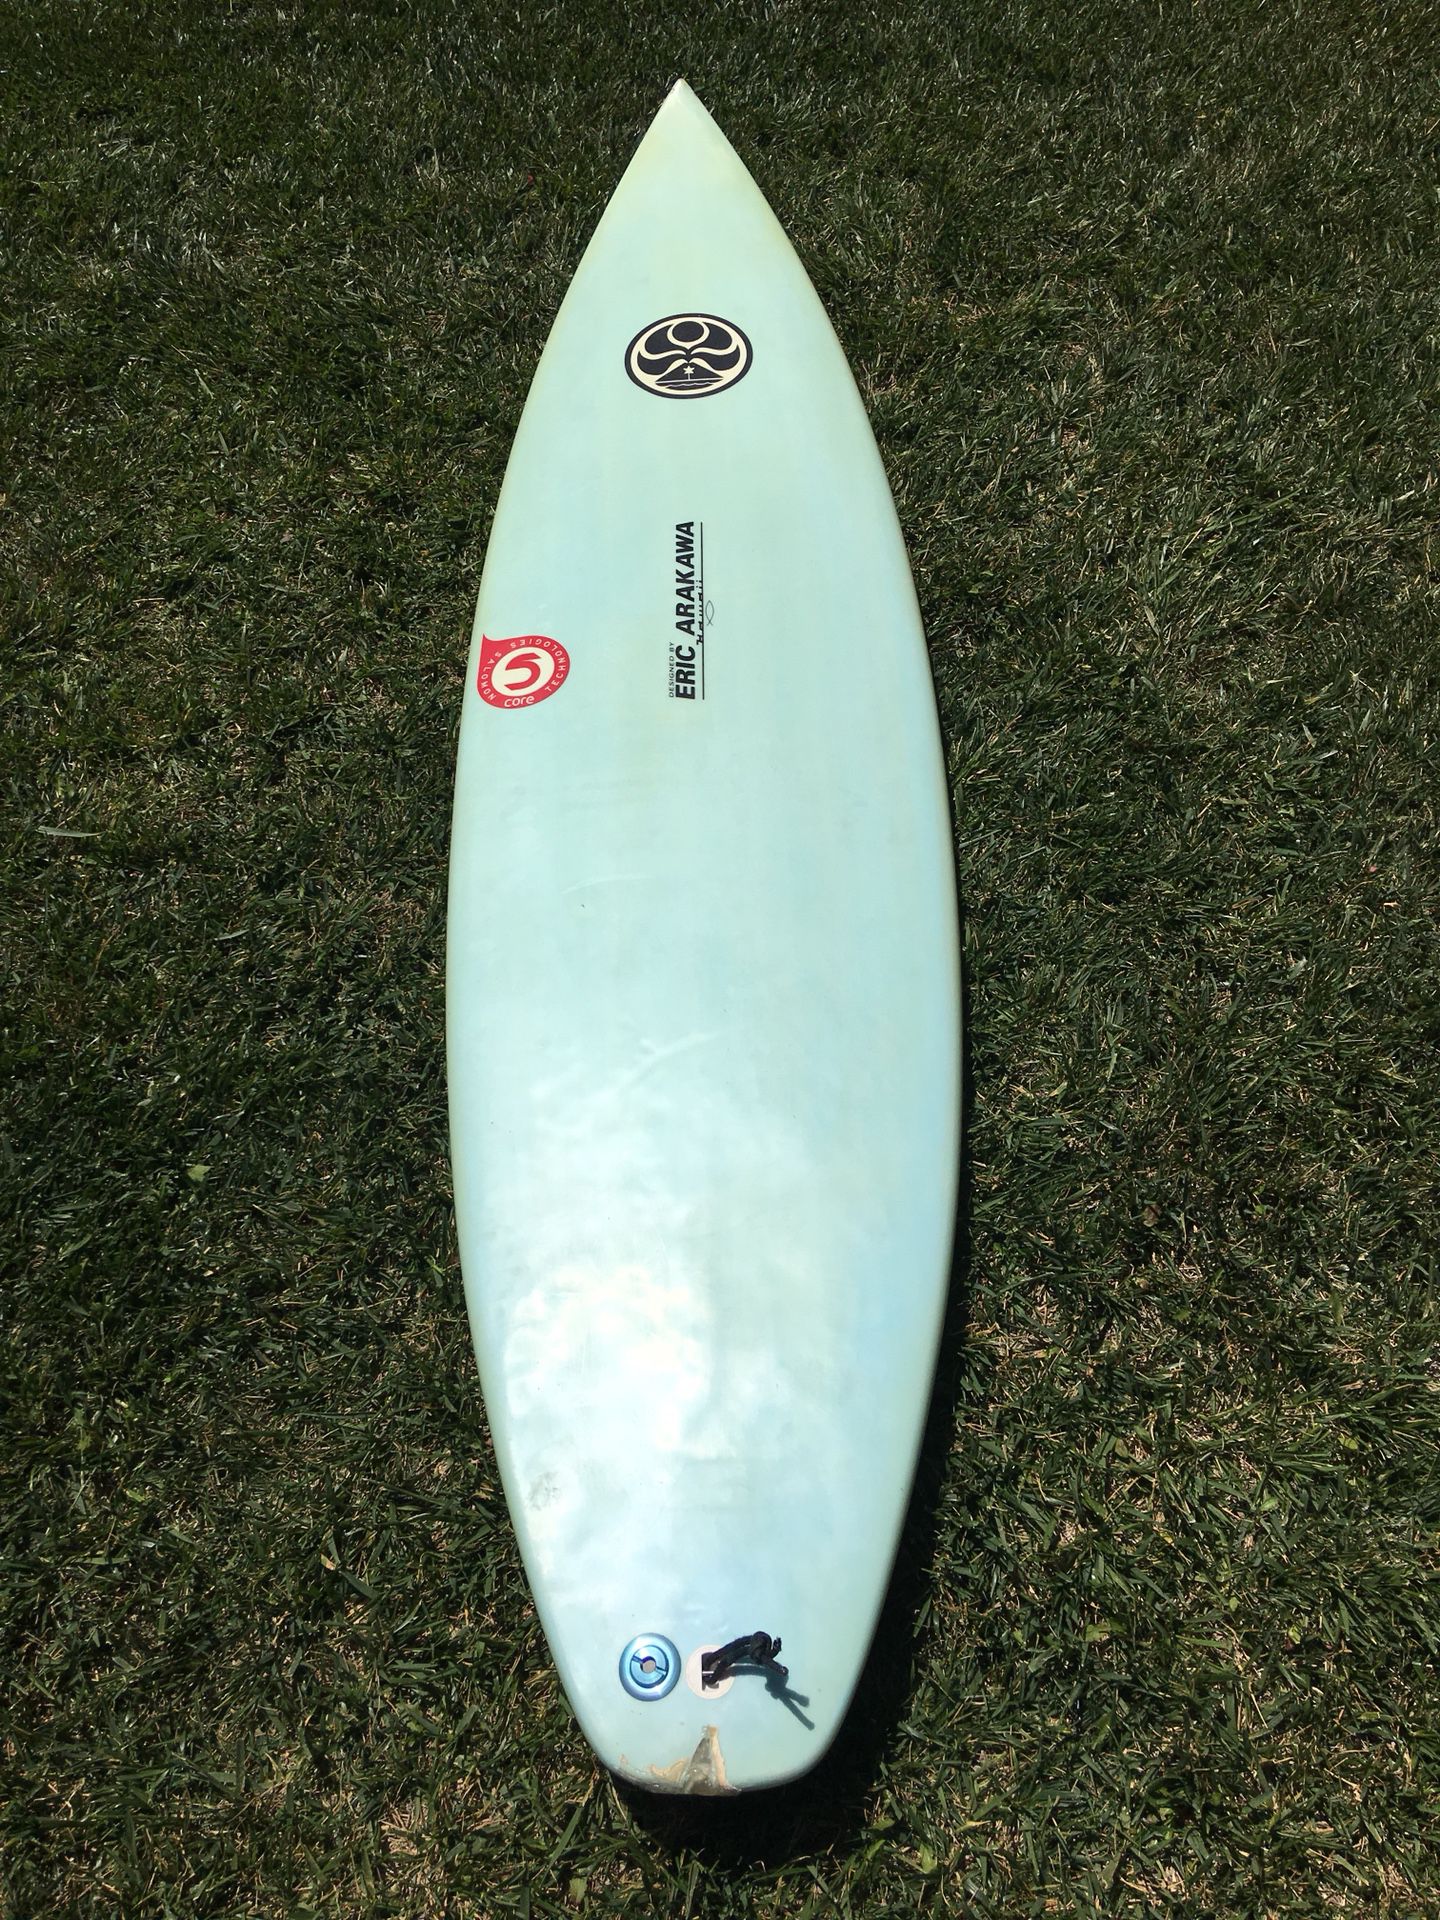 Eric Arakawa Surfboard for Sale in San Diego, CA - OfferUp